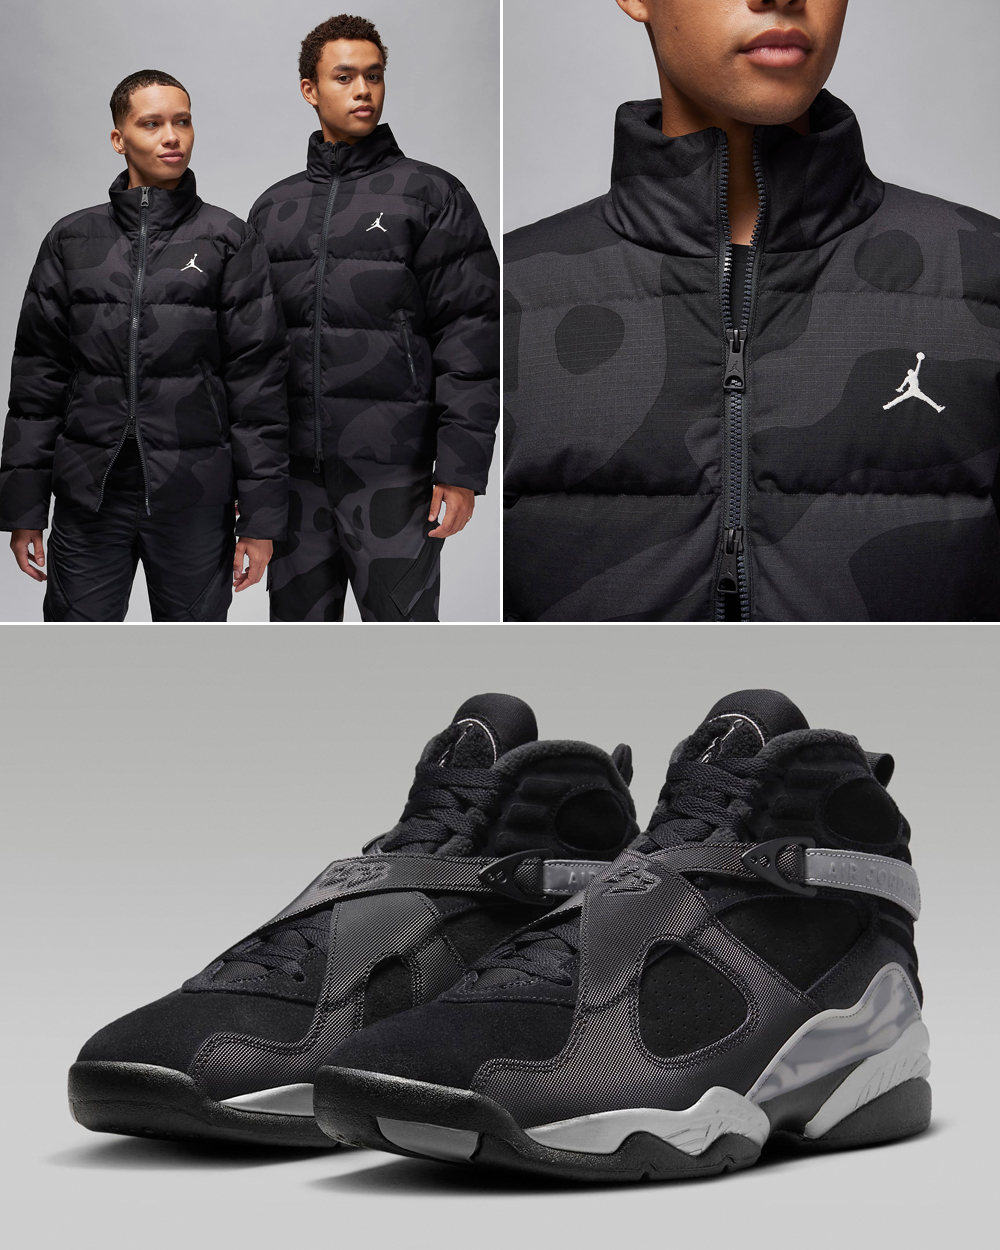 Air-Jordan-8-Winterized-Gunsmoke-Jacket-Outfit